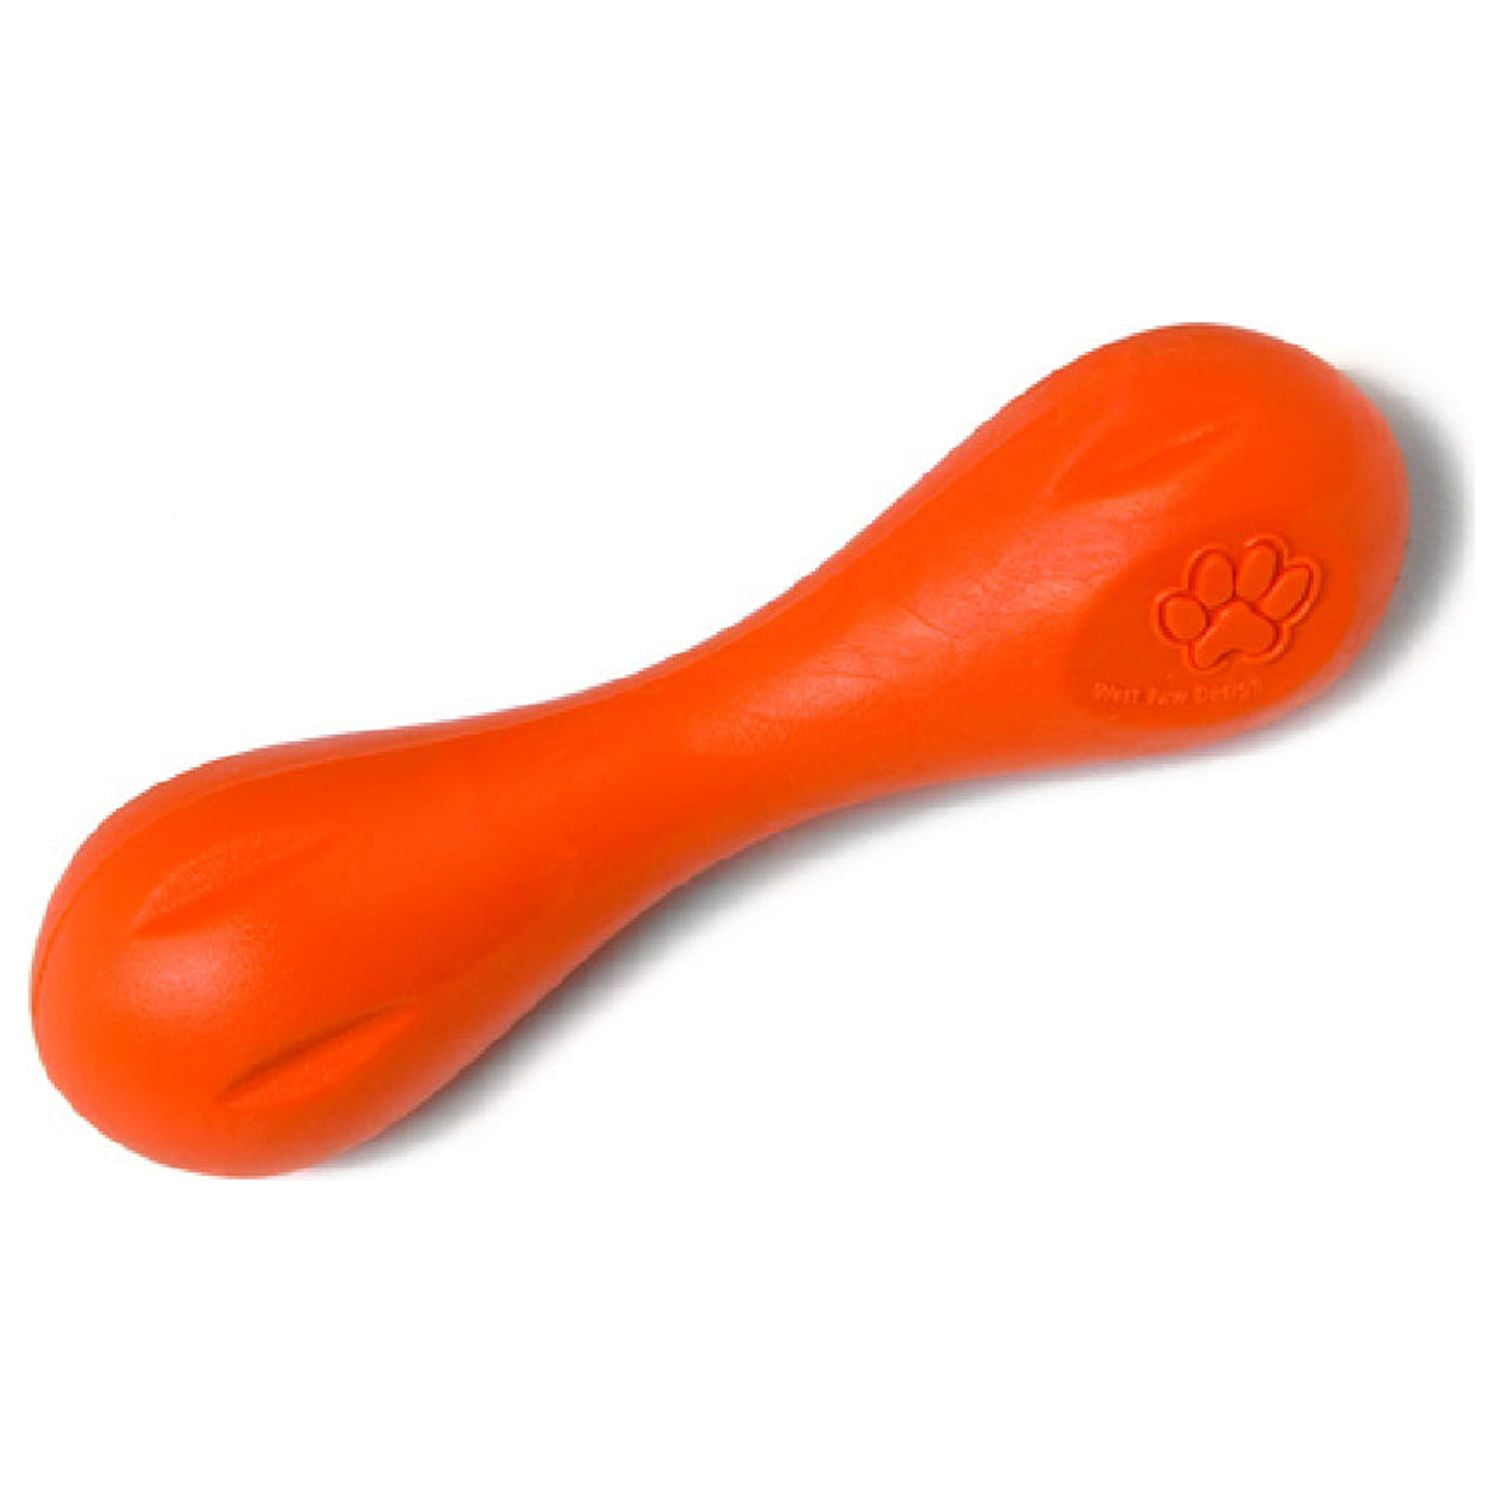 West Paw 8000369 Zogoflex Orange Hurley Bone Synthetic Rubber Chew Dog Toy, Small